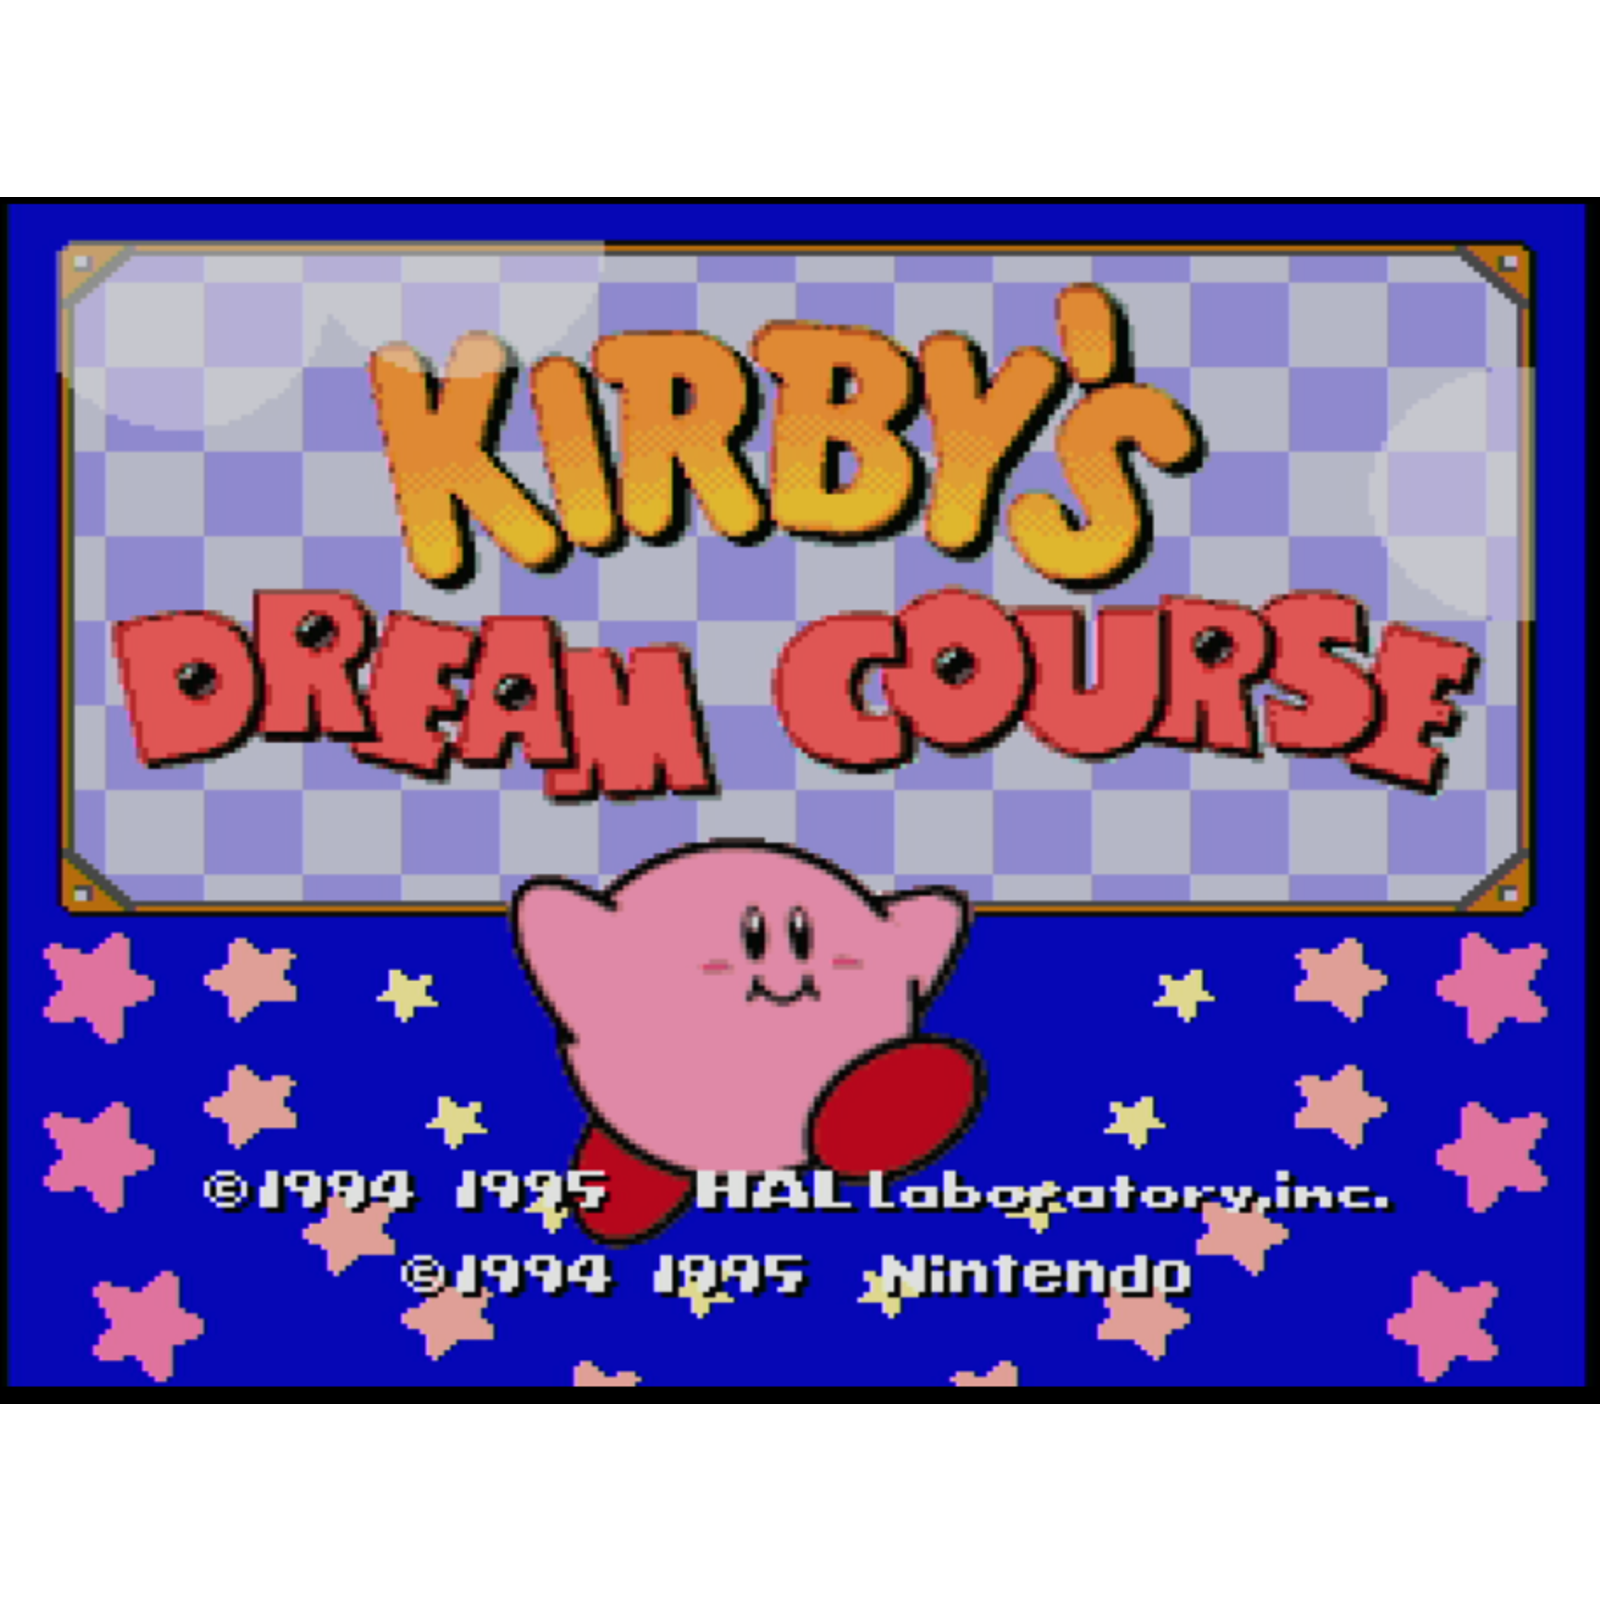 Nintendo Kirby's Dream Course